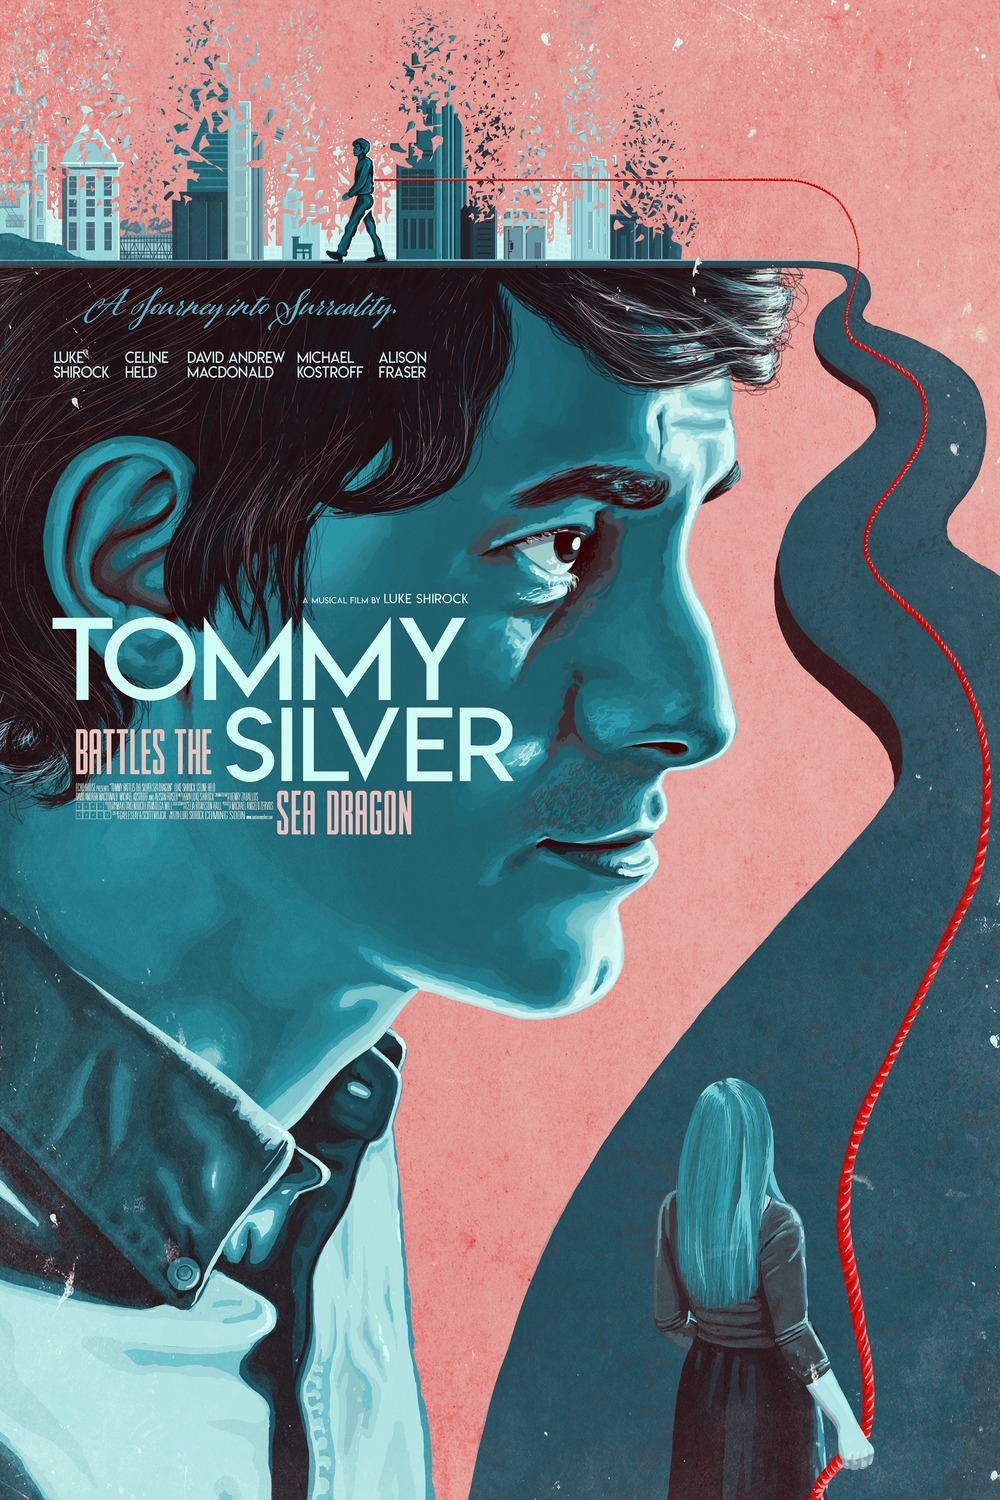 Nonton film Tommy Battles the Silver Sea Dragon layarkaca21 indoxx1 ganool online streaming terbaru